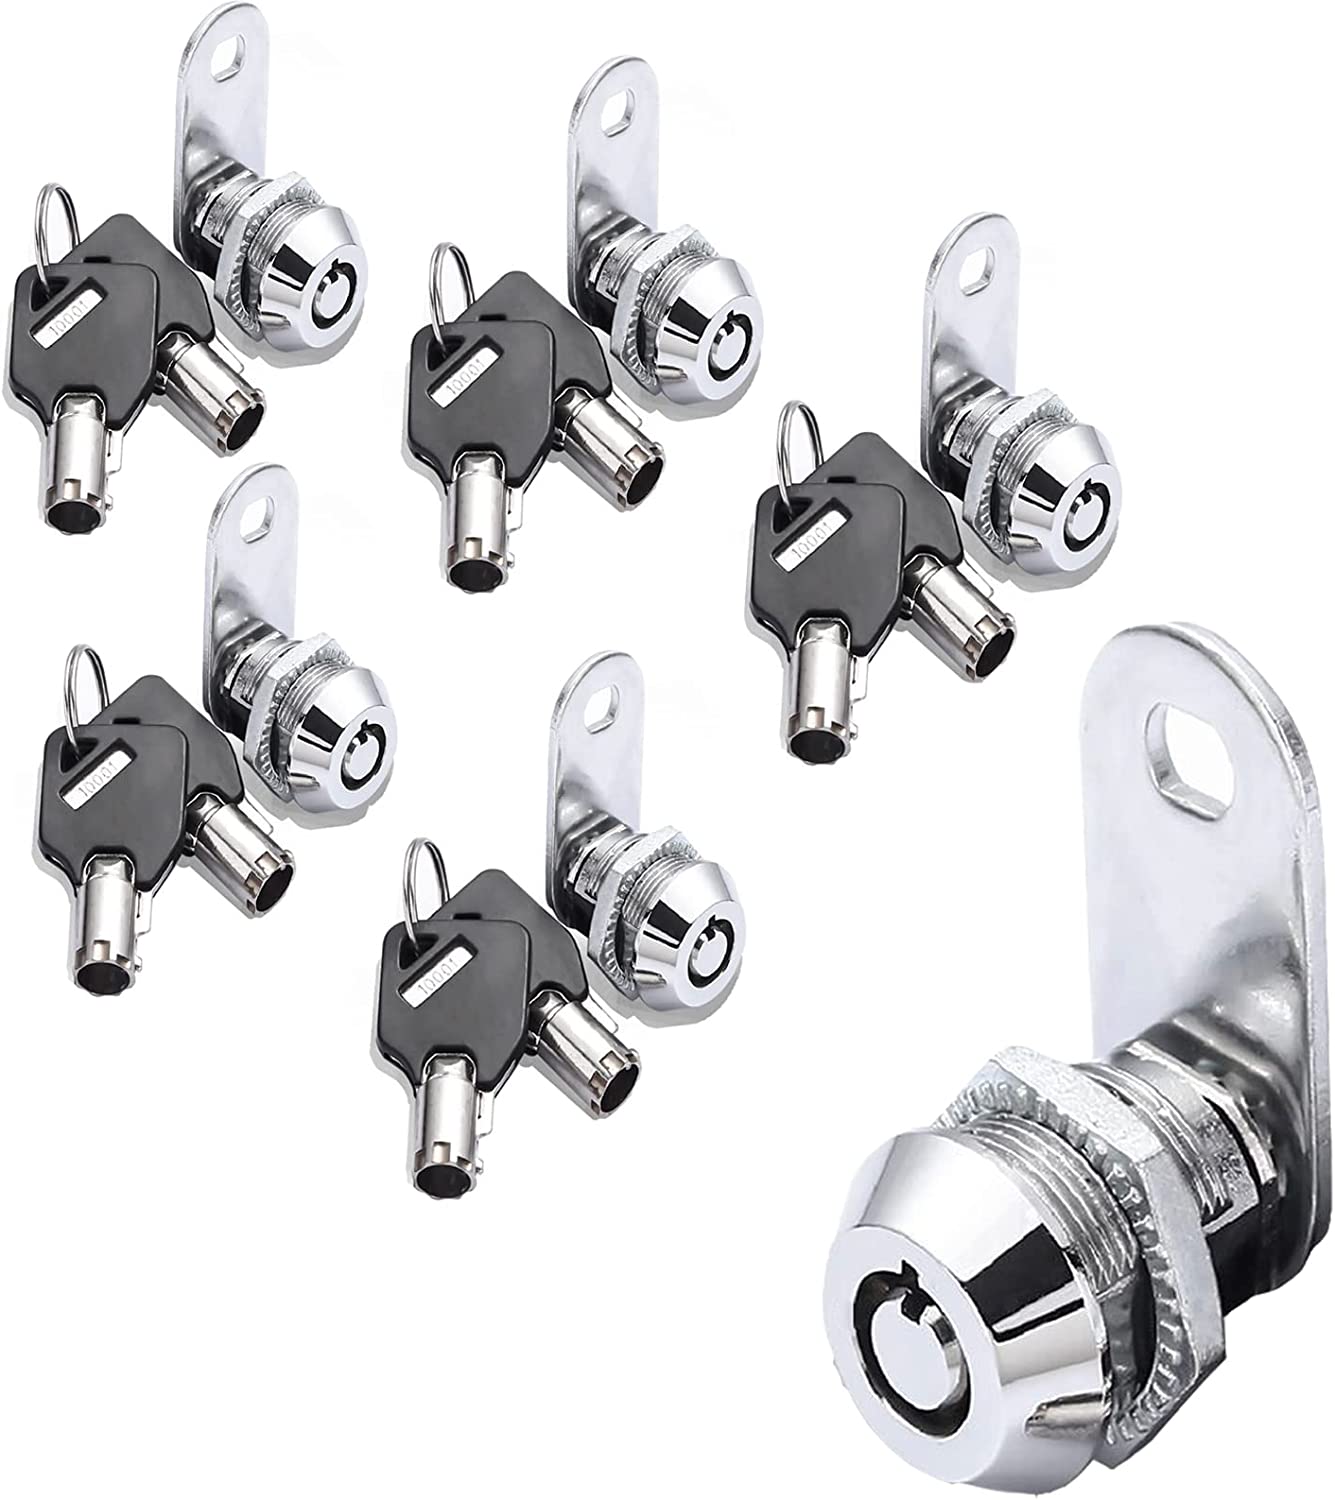 2pc Tubular Cam Lock with 5/8" Cylinder 2 Keys Alike Pull Drawer Cabinet Toolbox 